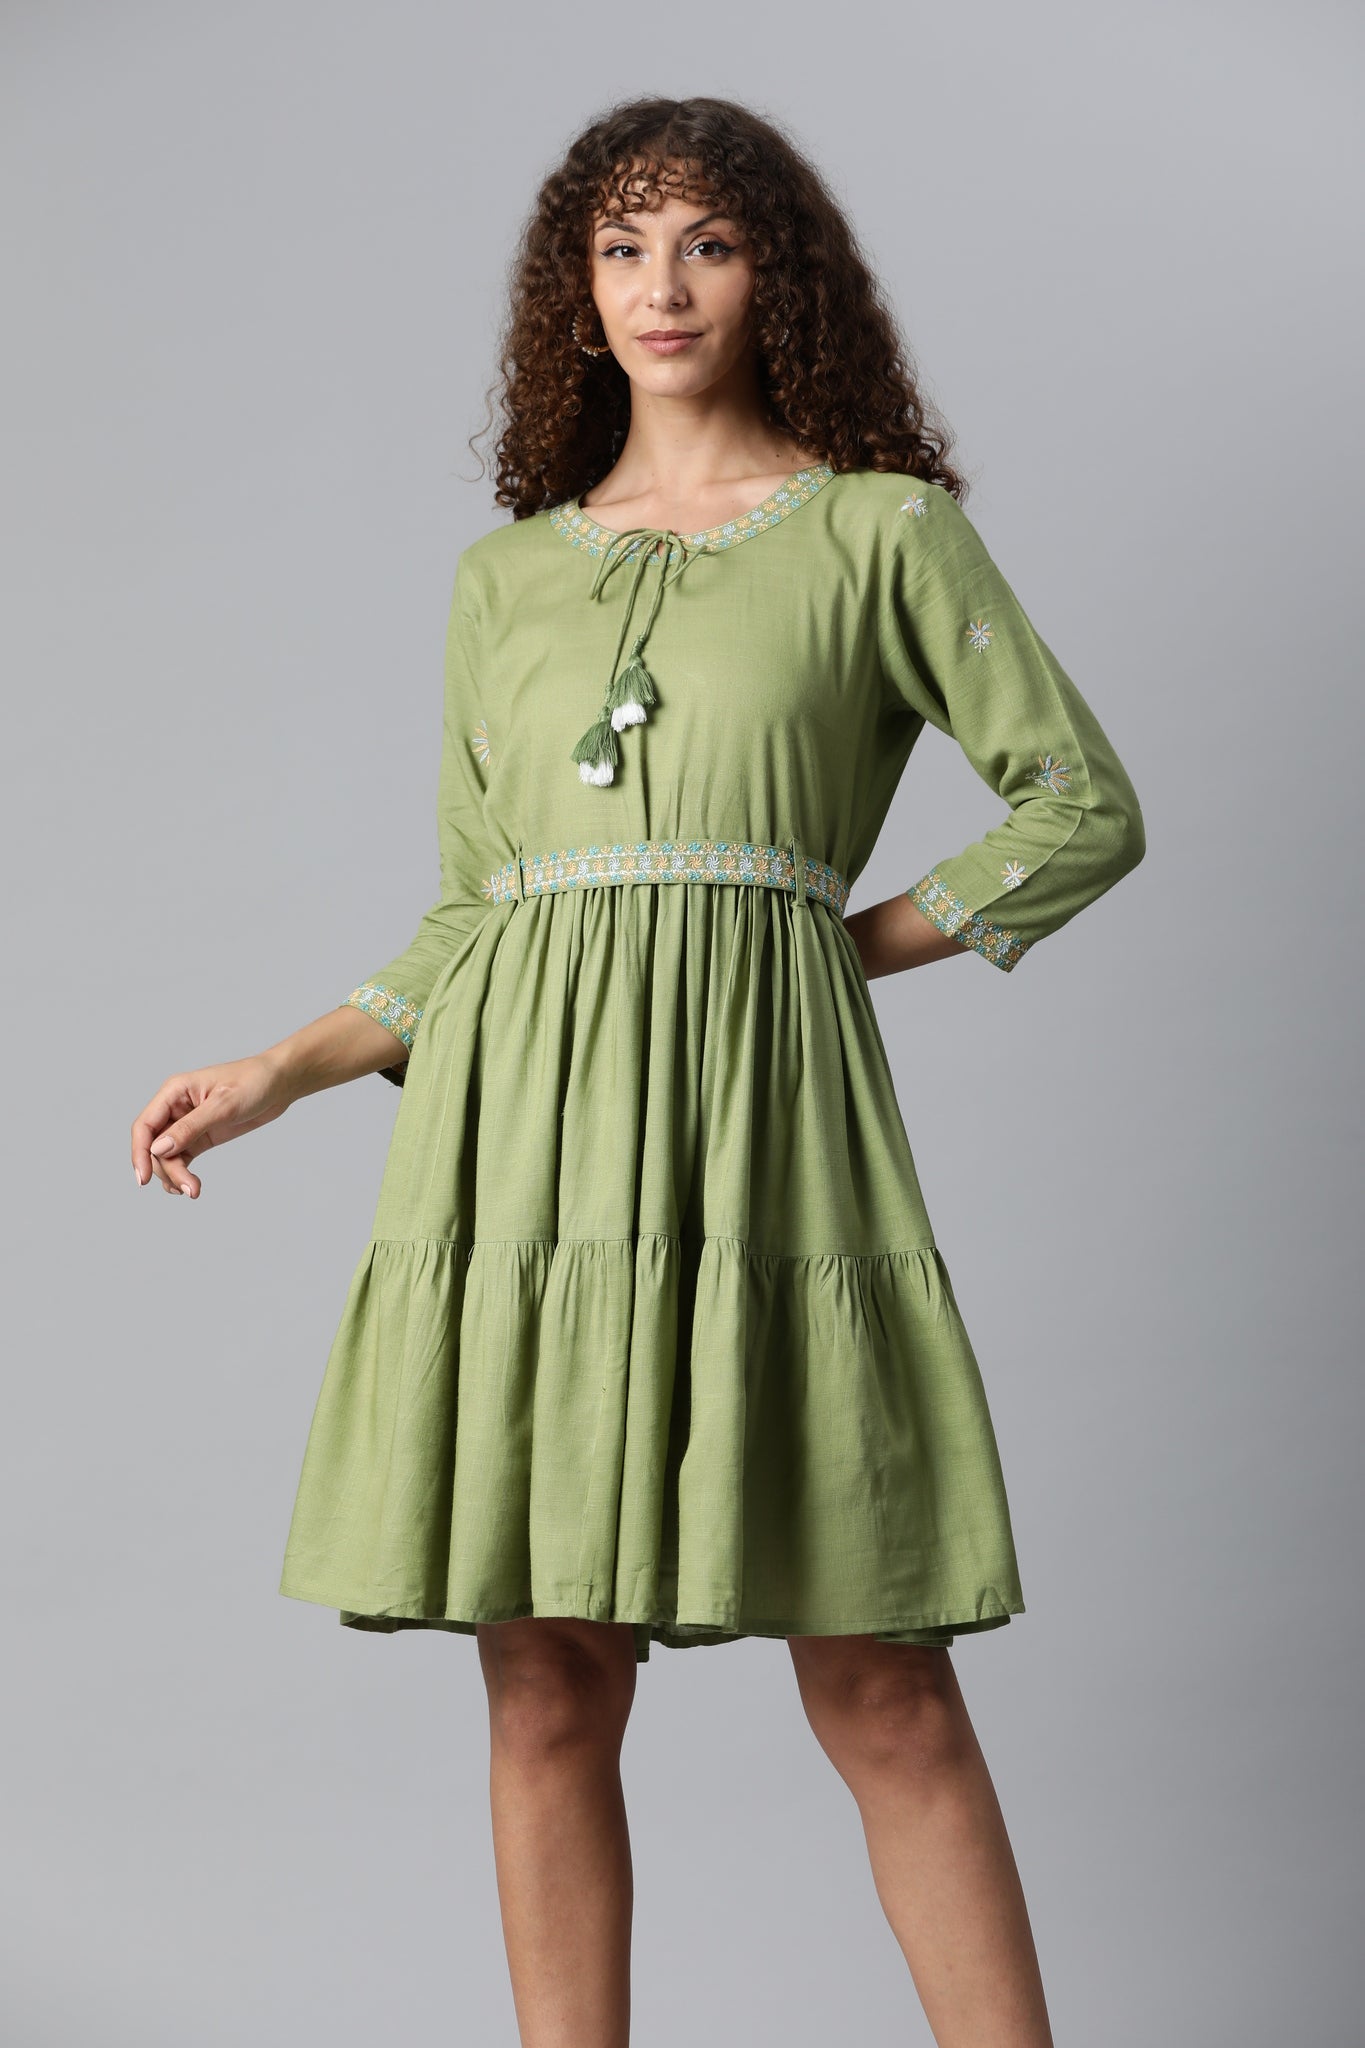 Olive green dress by Increscent | The Secret Label